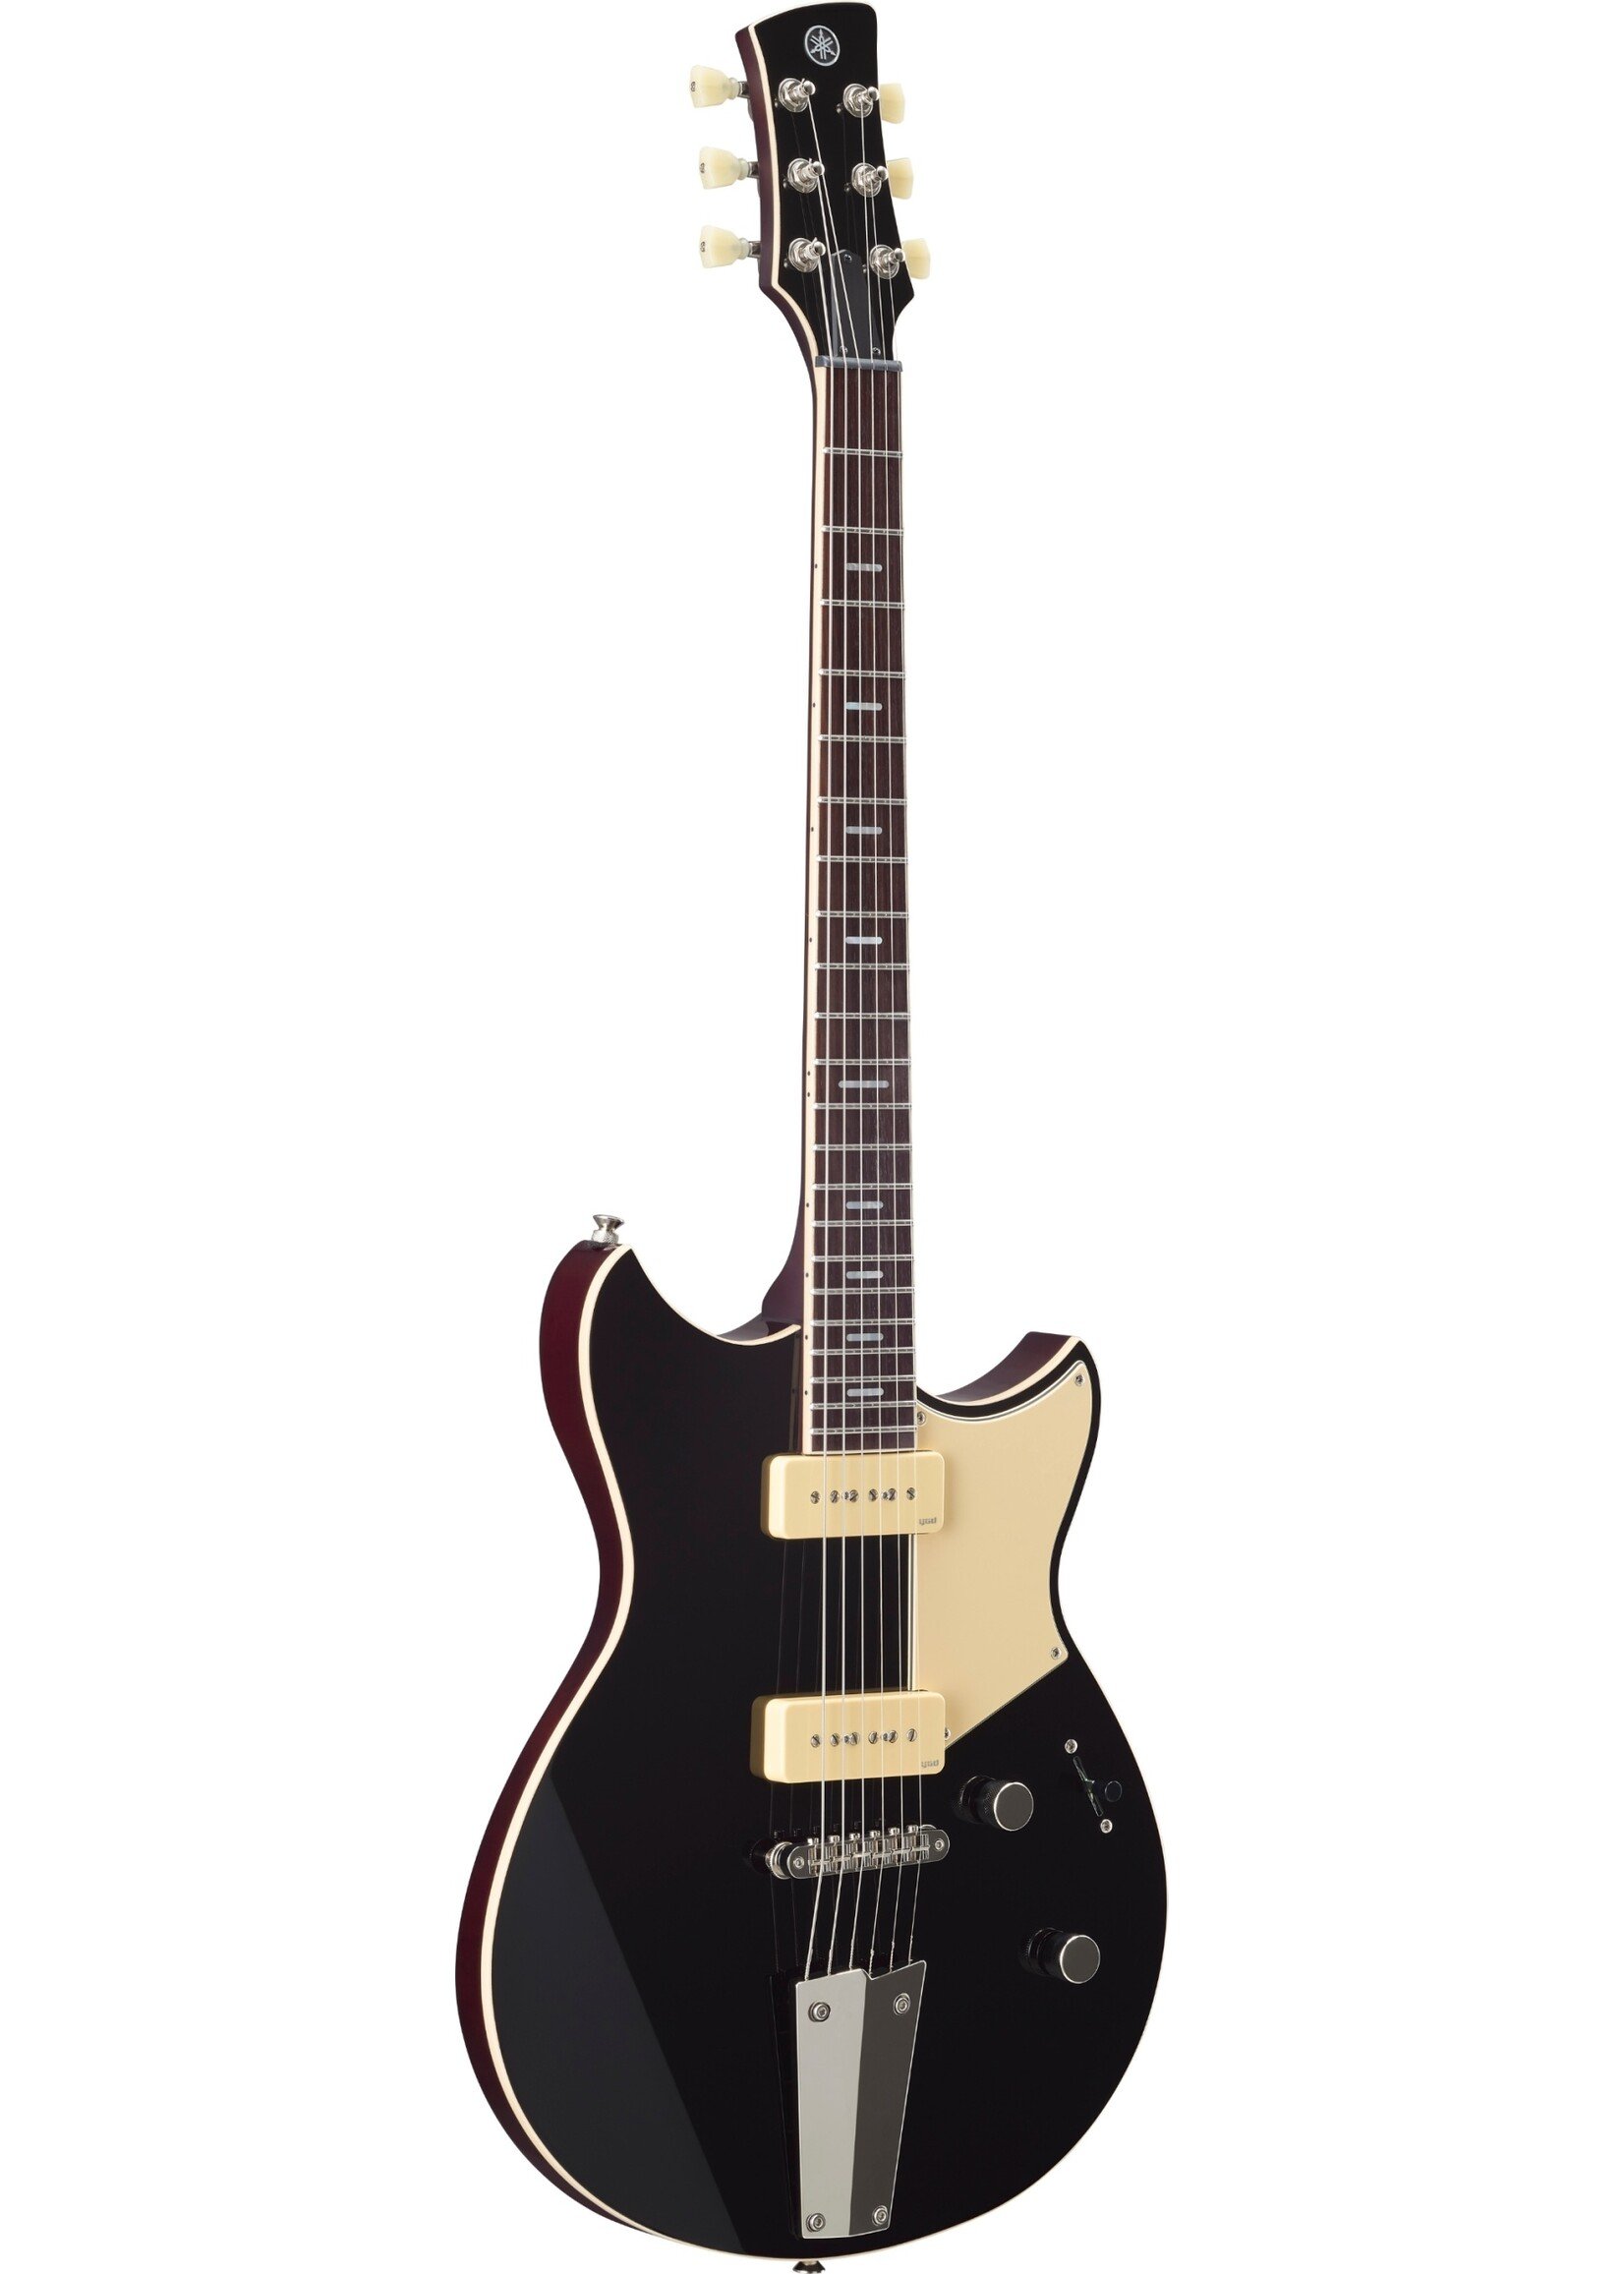 Yamaha Yamaha Revstar Standard RSS02T Electric Guitar in Black